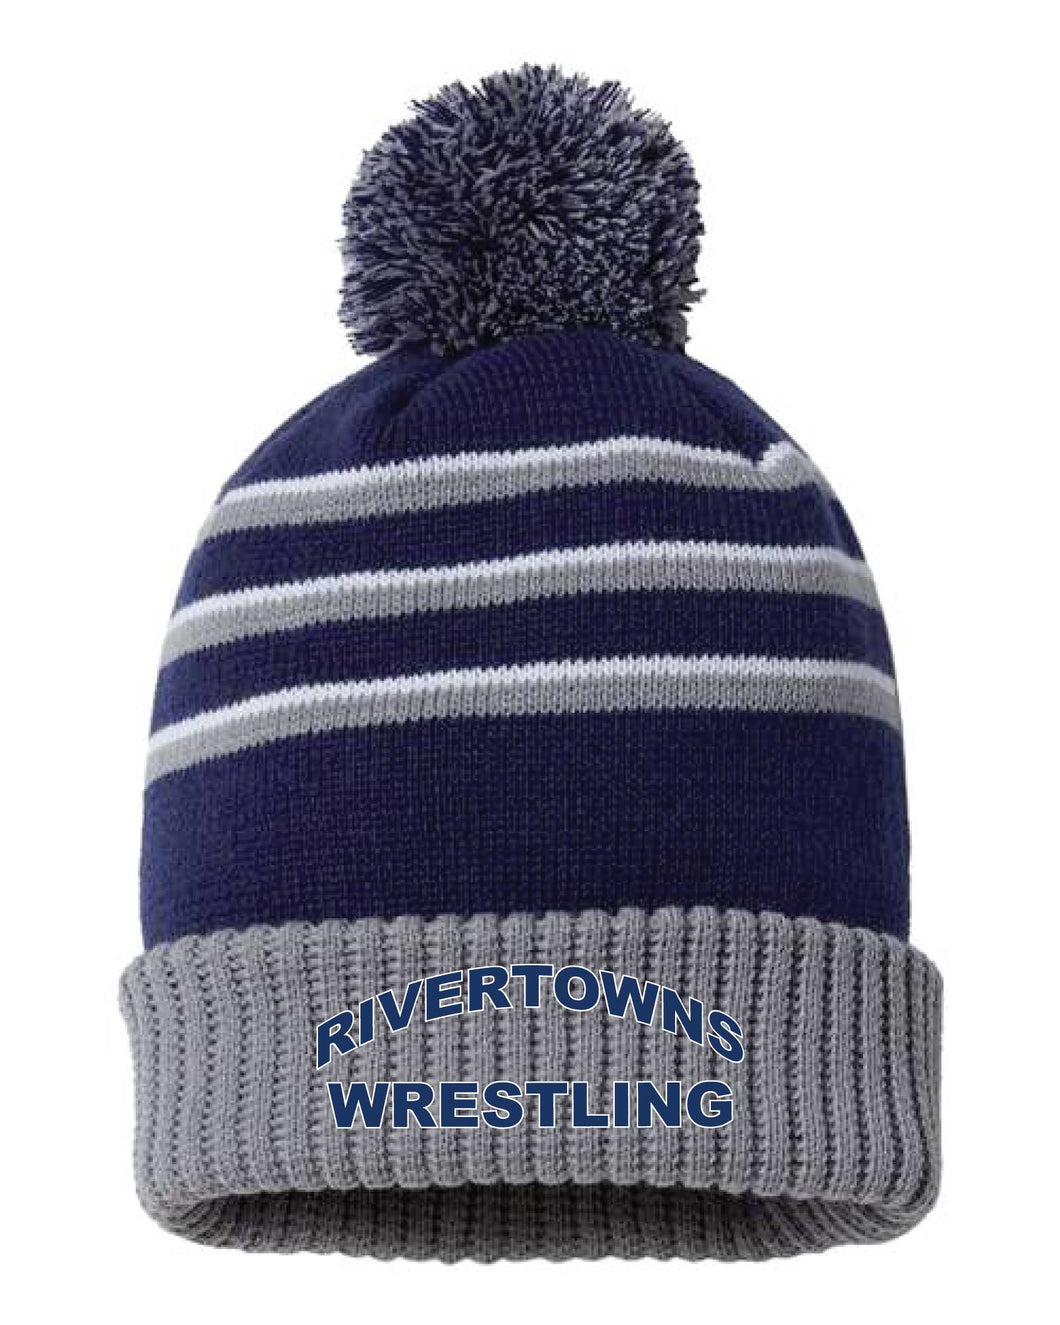 Rivertowns Wrestling Pom Beanie - Navy/Gray - 5KounT